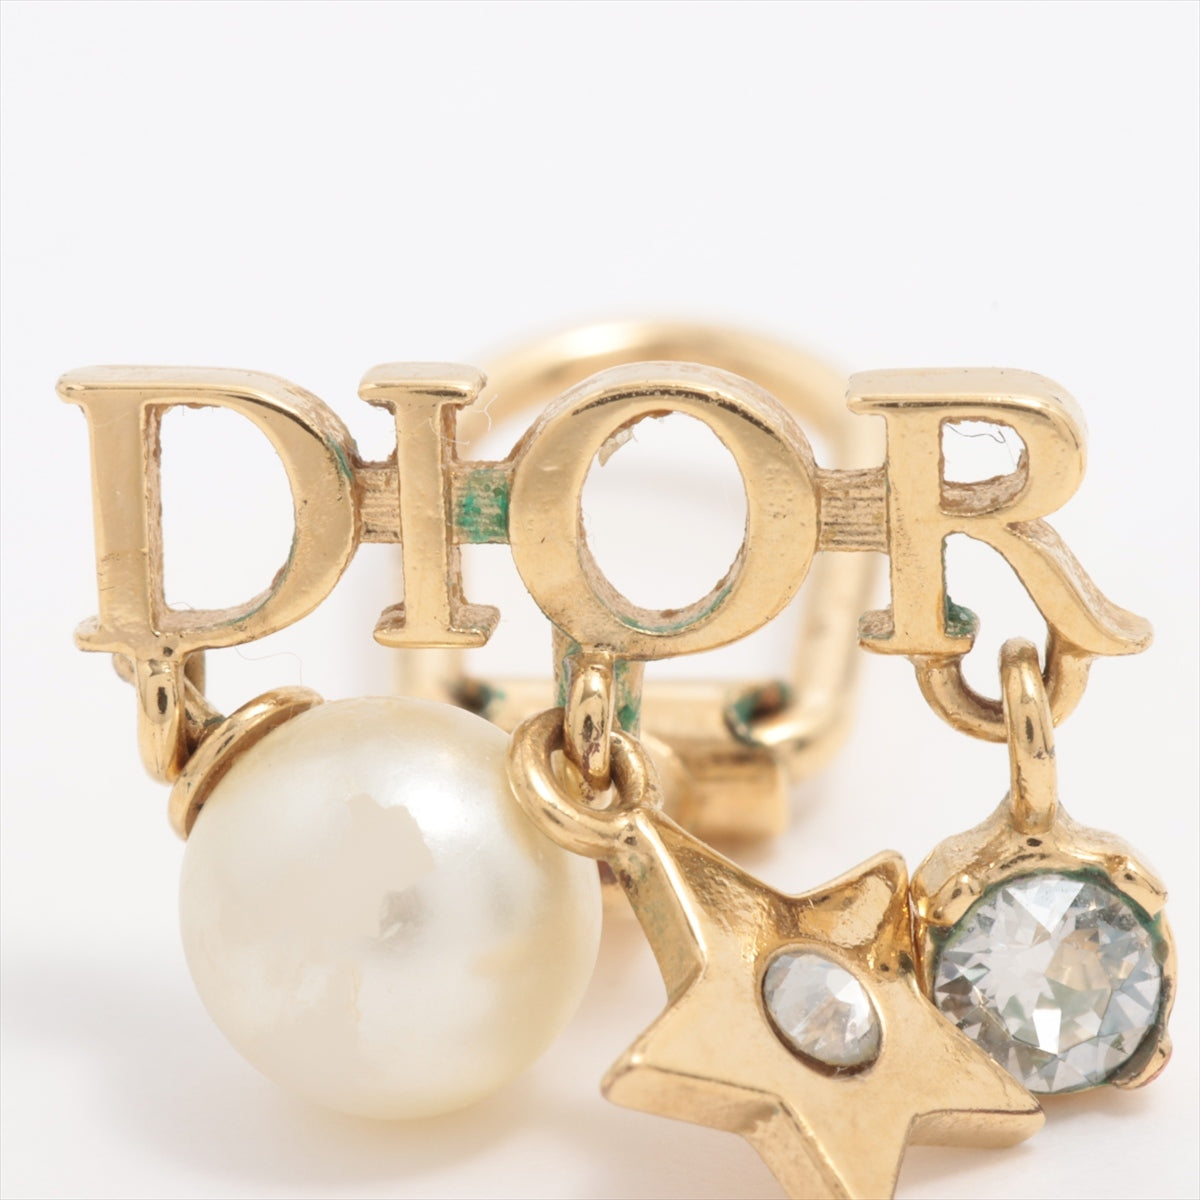 Christian Dior Dio(r)evolution Dio(r)evolution Earrings (for both ears) GP x rhinestone x fake pearl Gold No brand engraving